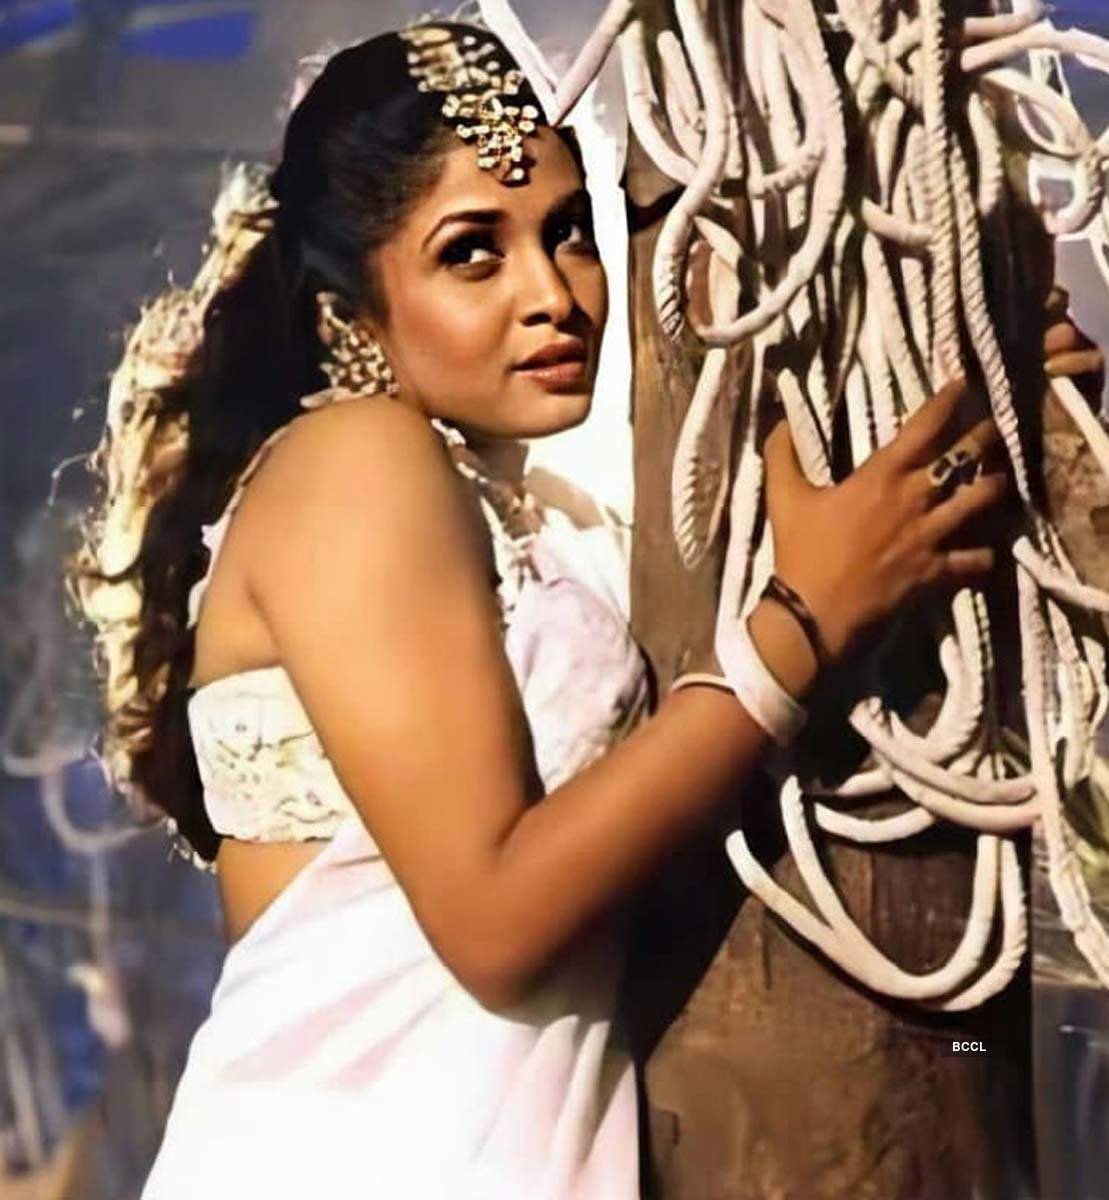 Pictures of gorgeous and versatile actress Ramya Krishnan through the years